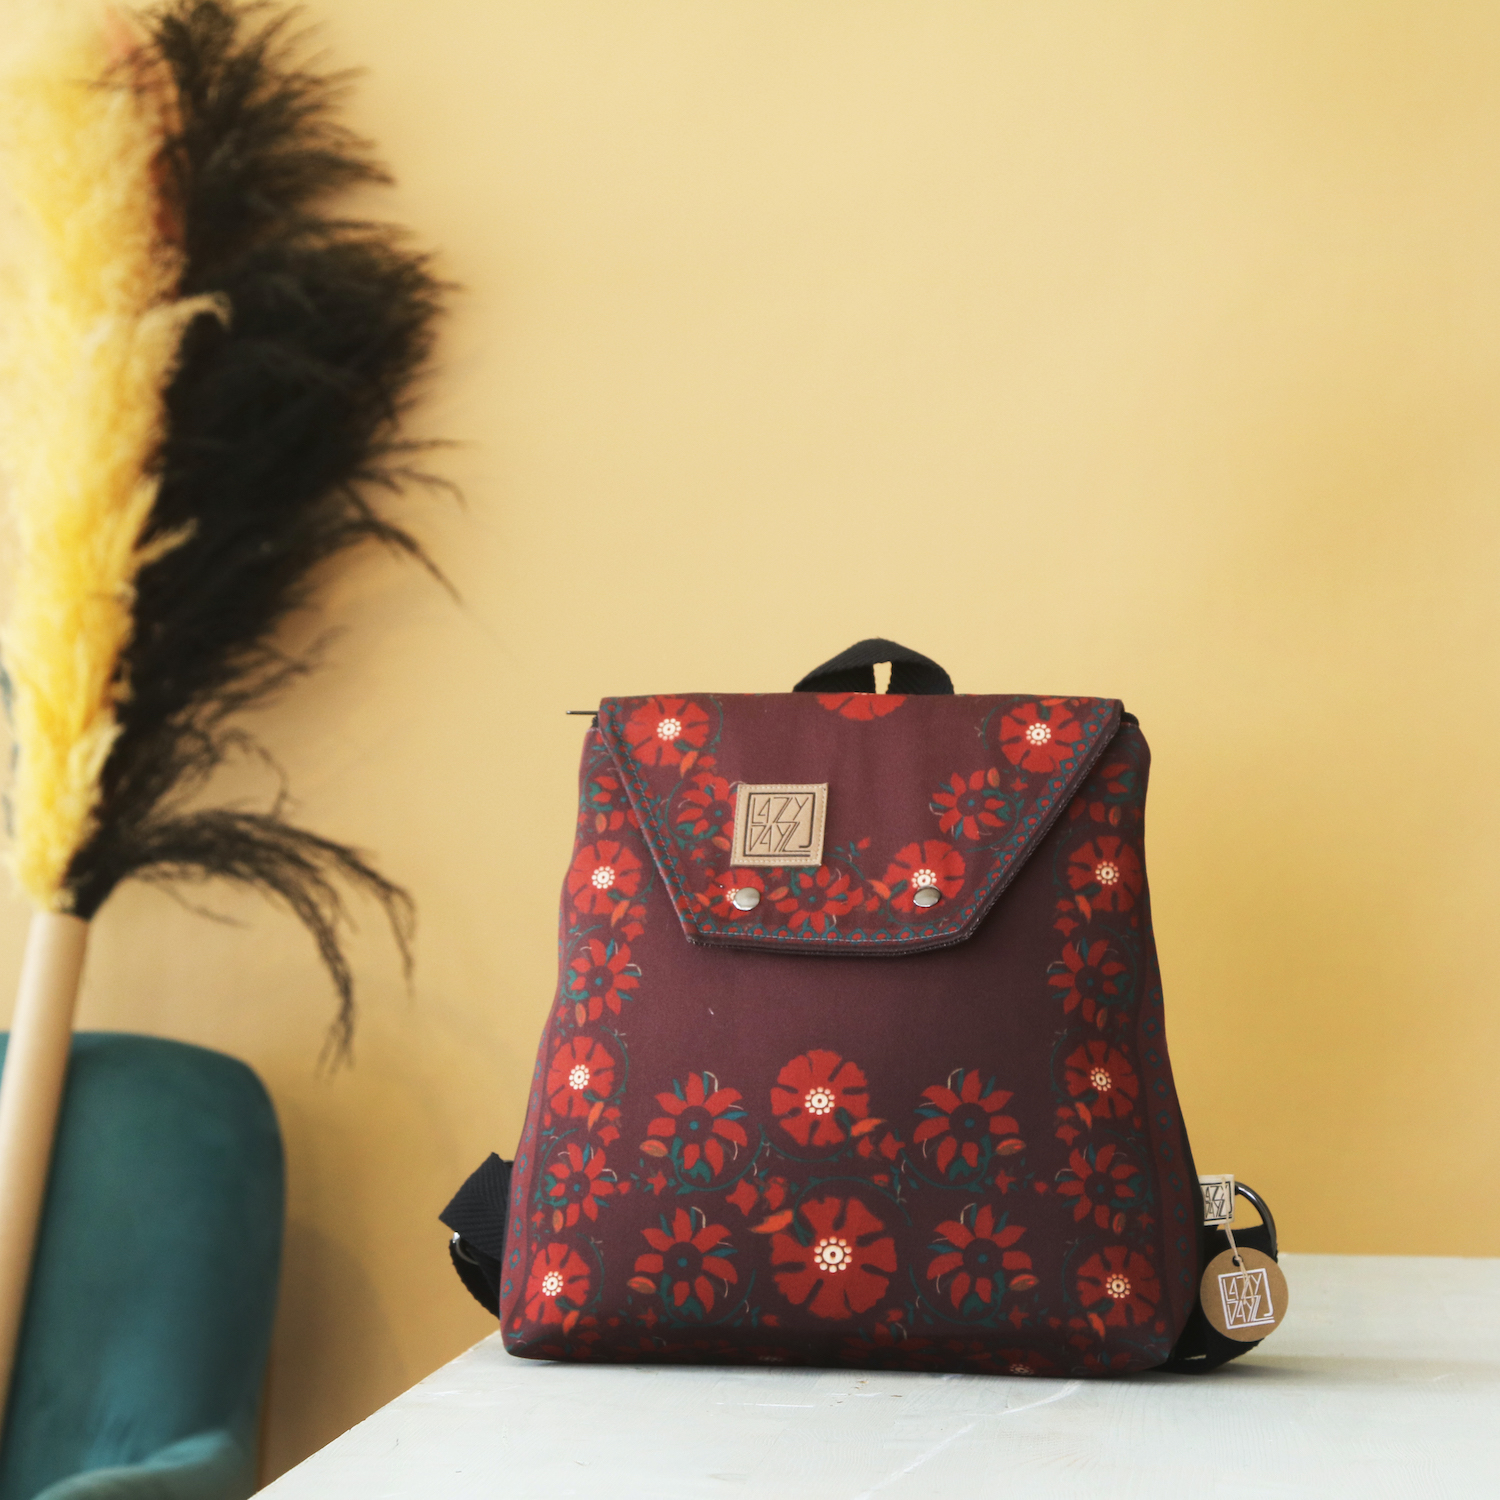 LazyDayz Designs Backpack γυναικείος σάκος πλάτης χειροποίητος bb0304d